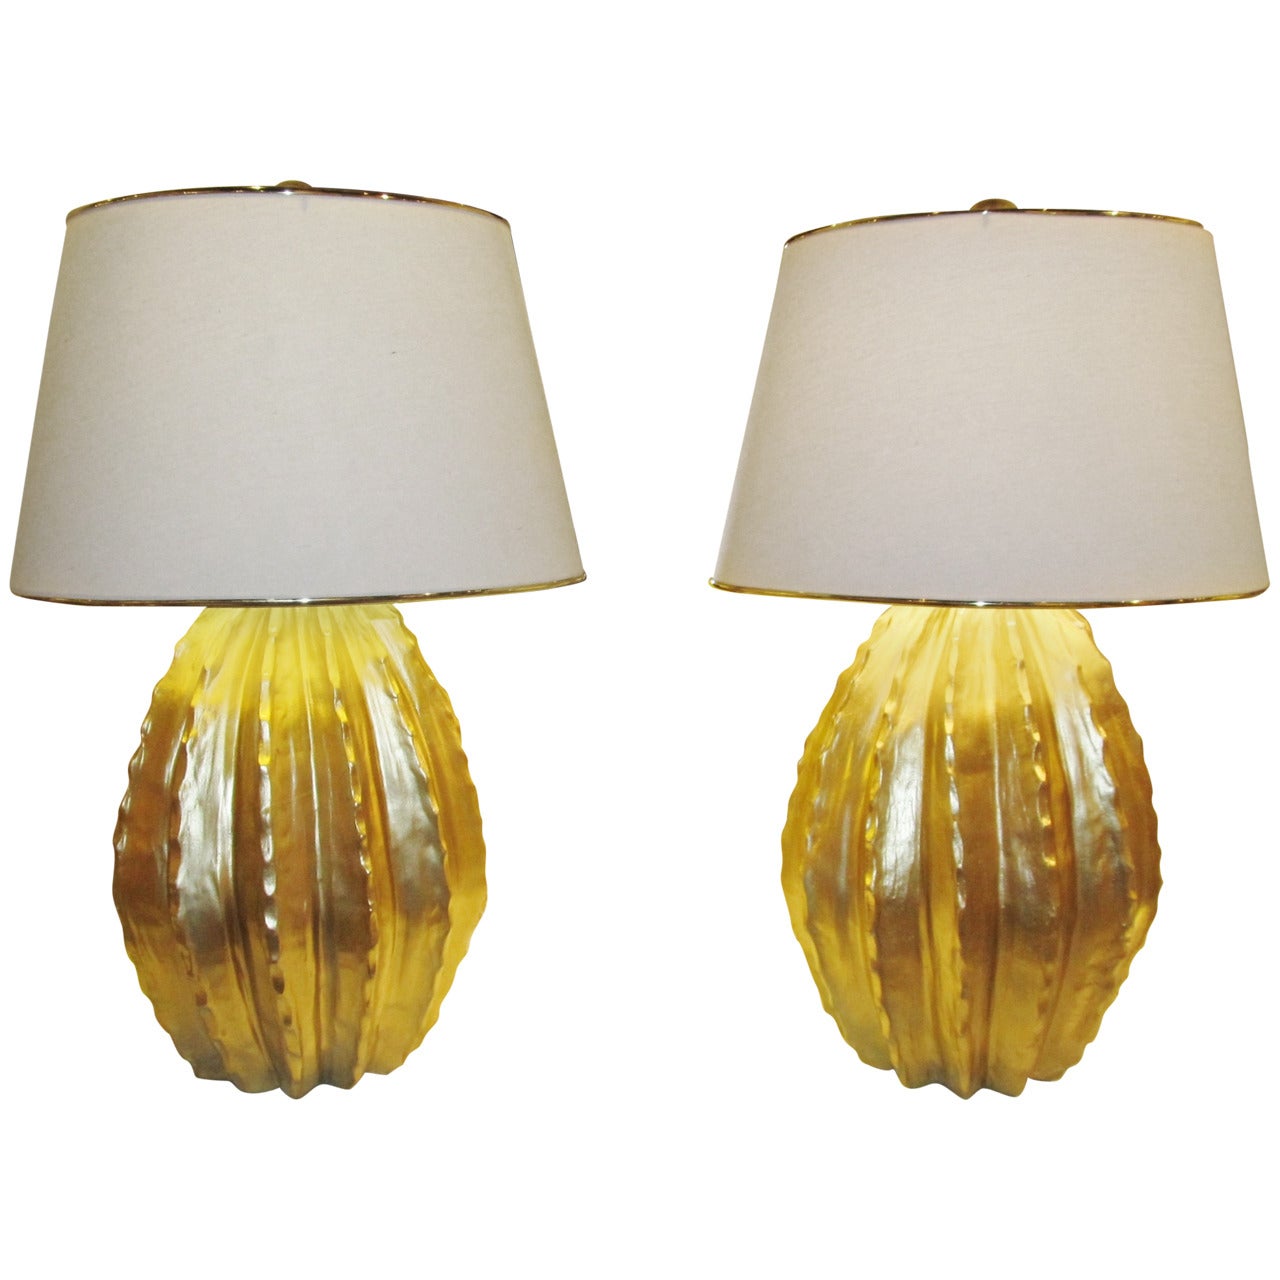 Pair of Gold Cactus Lamps